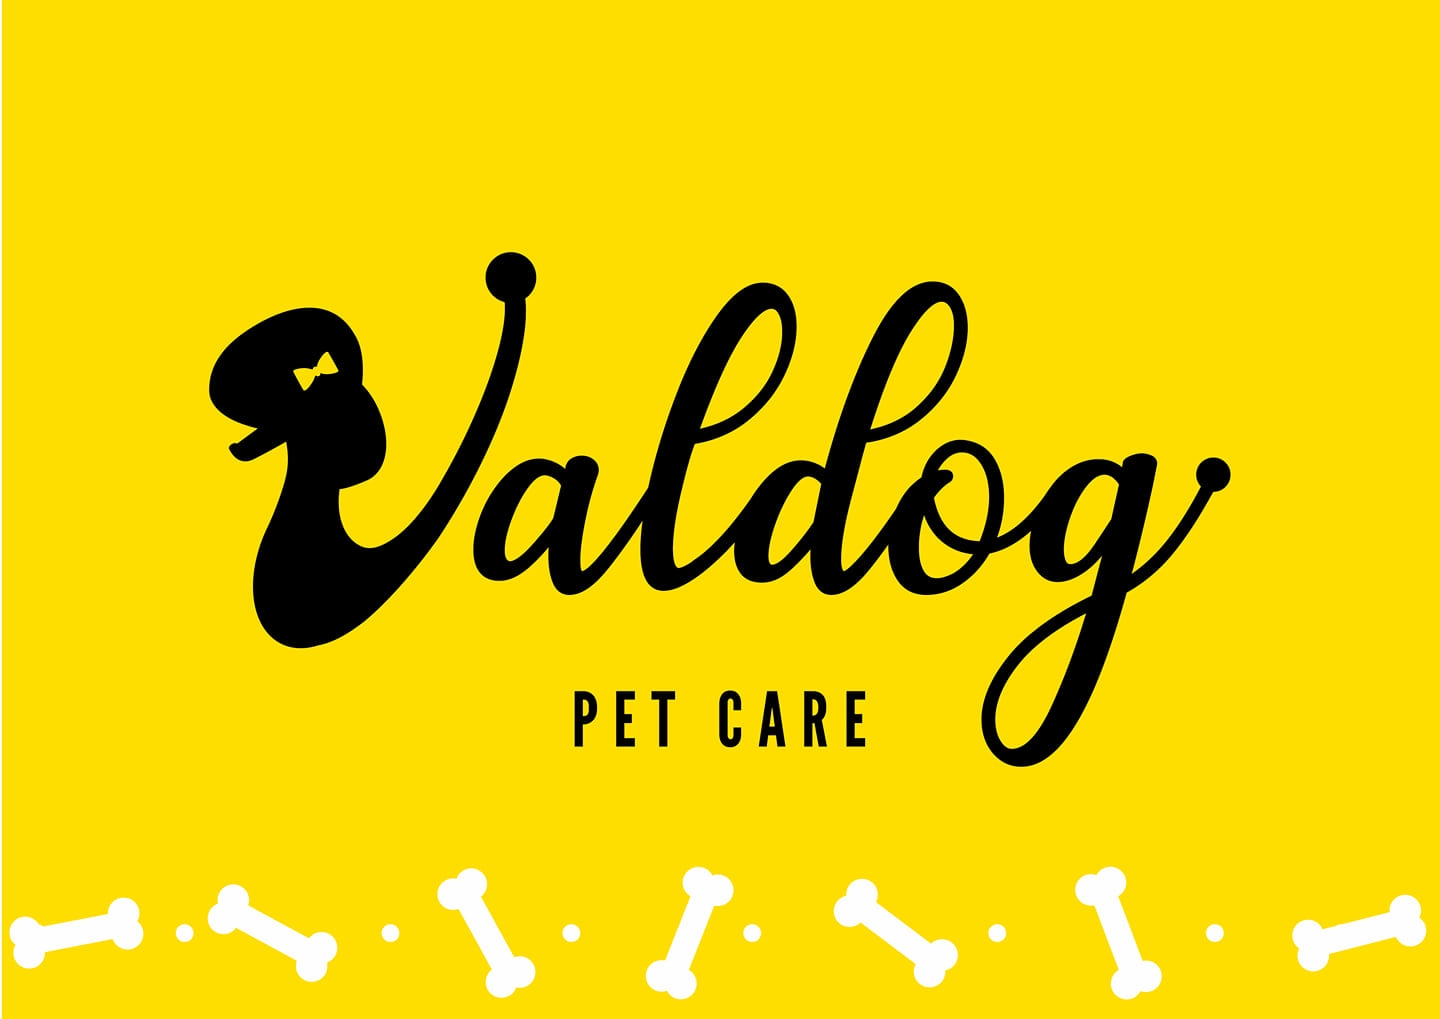 ValDog Pet Care